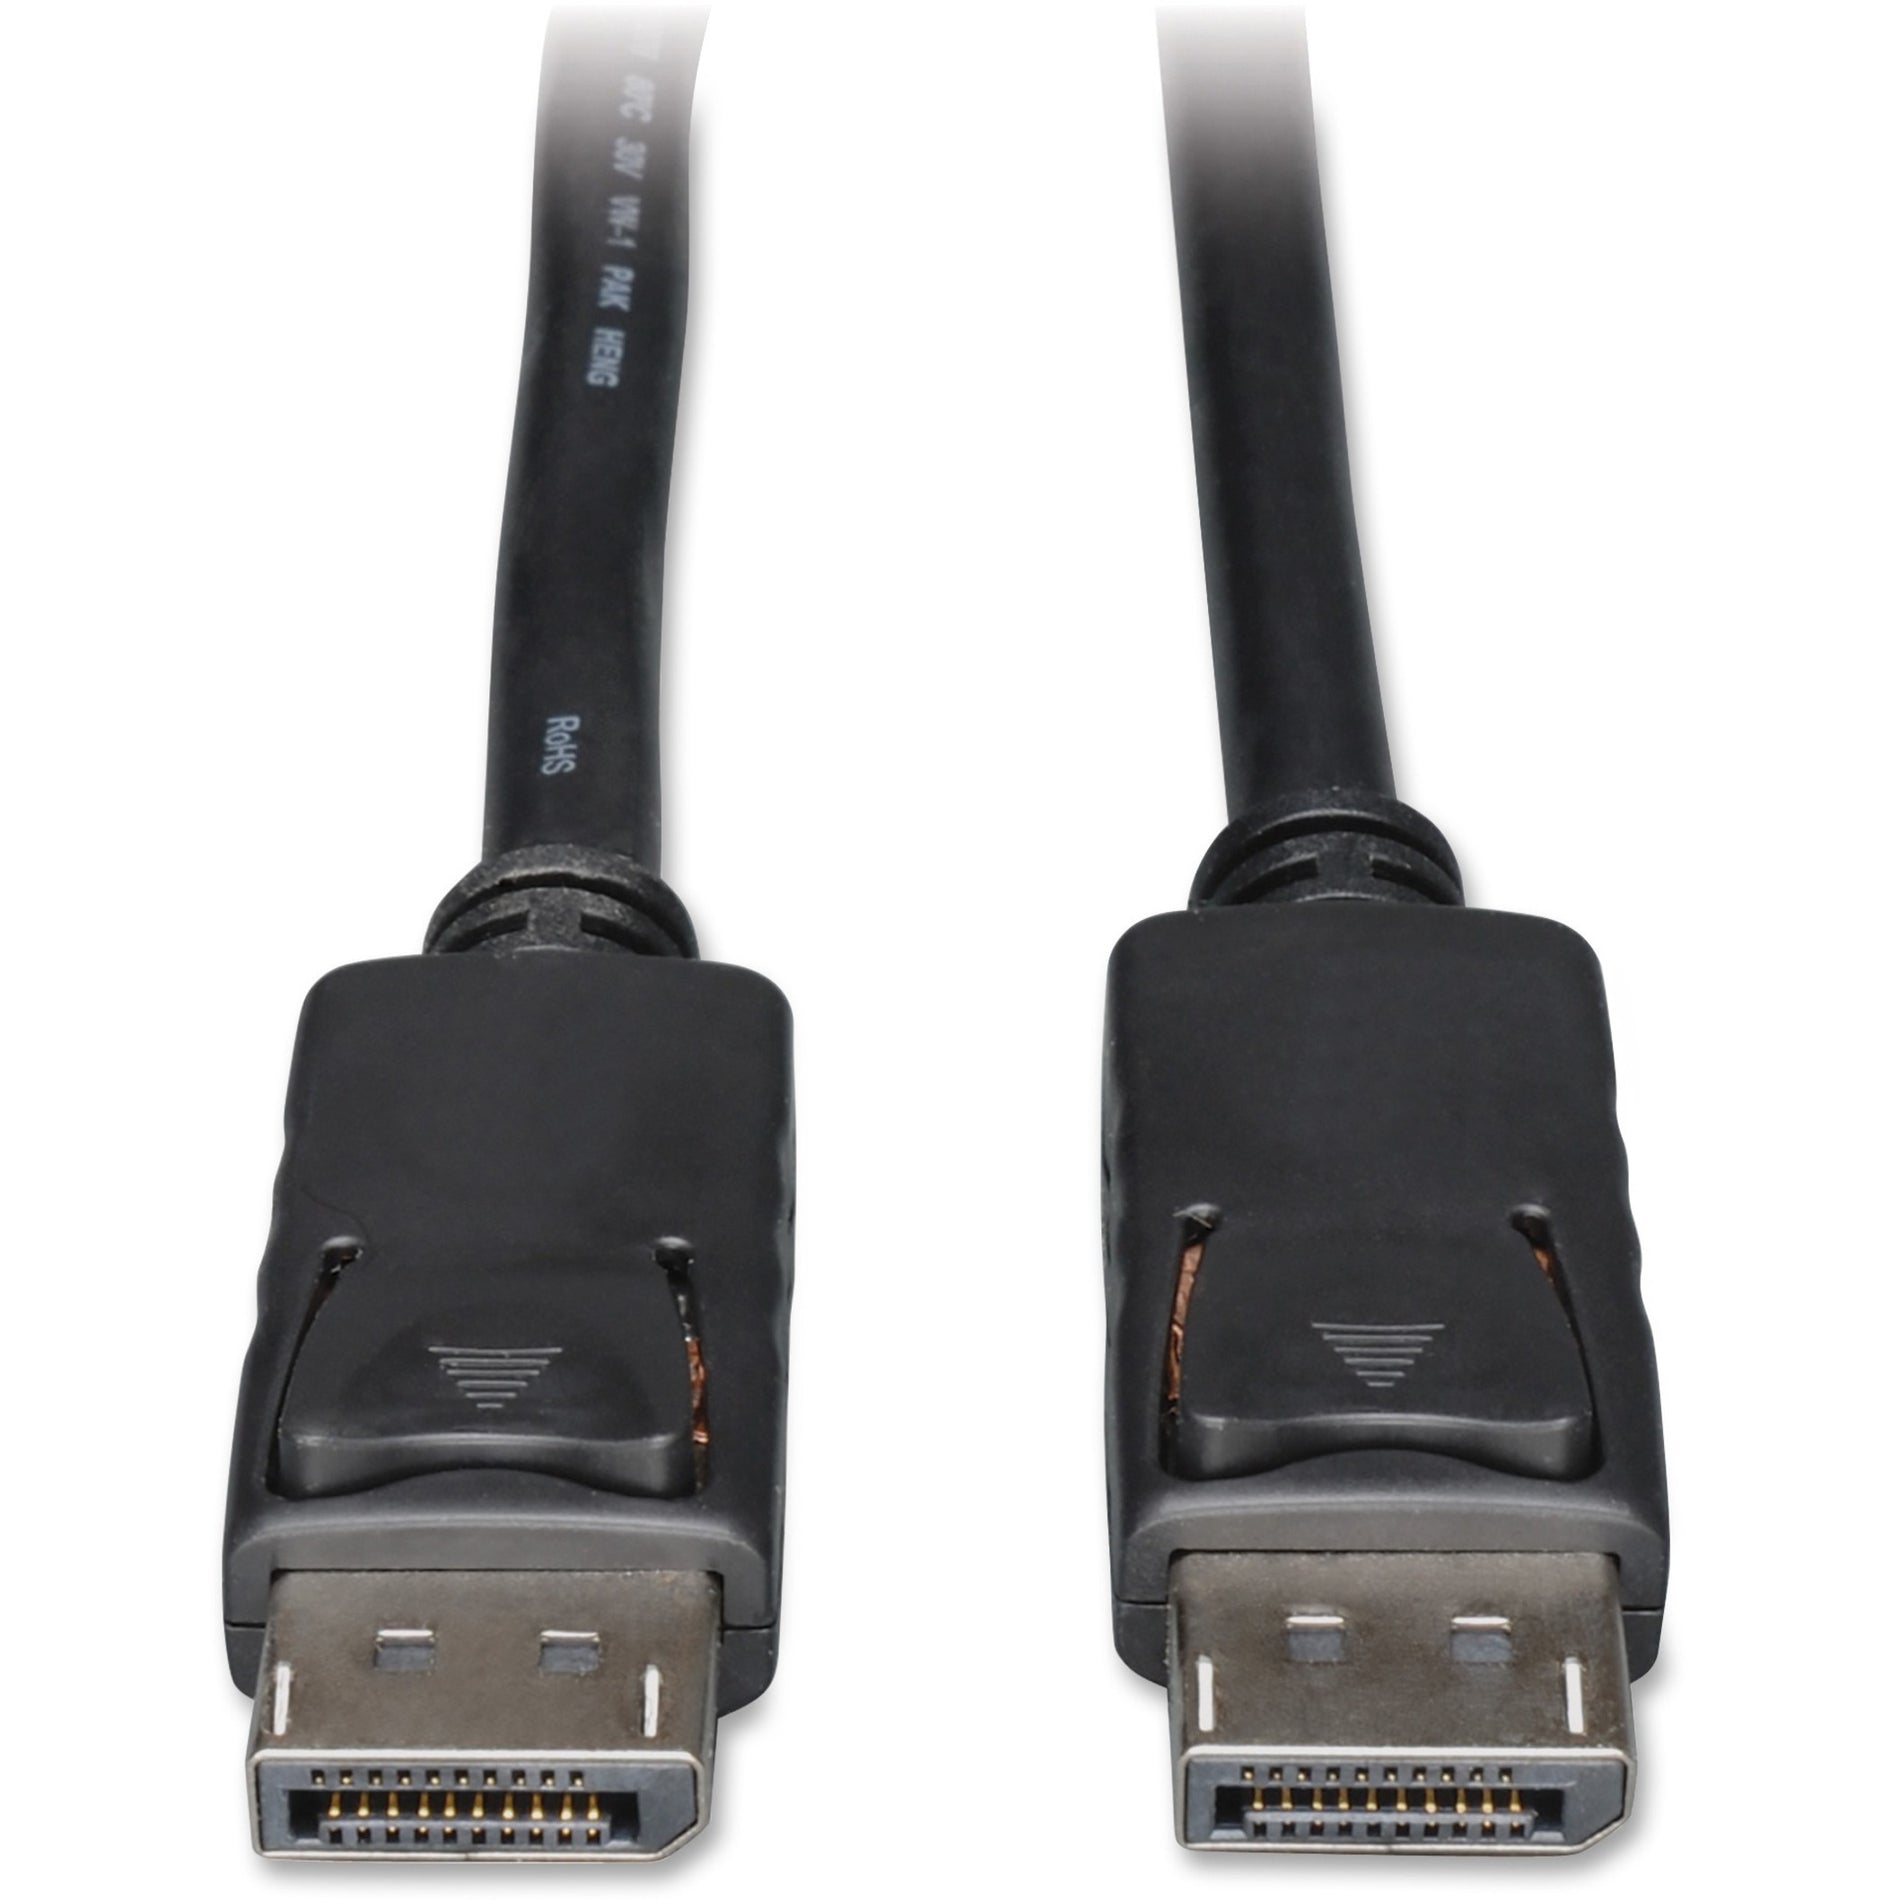 Tripp Lite P580-006 DisplayPort Cable, 6Ft, Black - Supports 4K x 2K